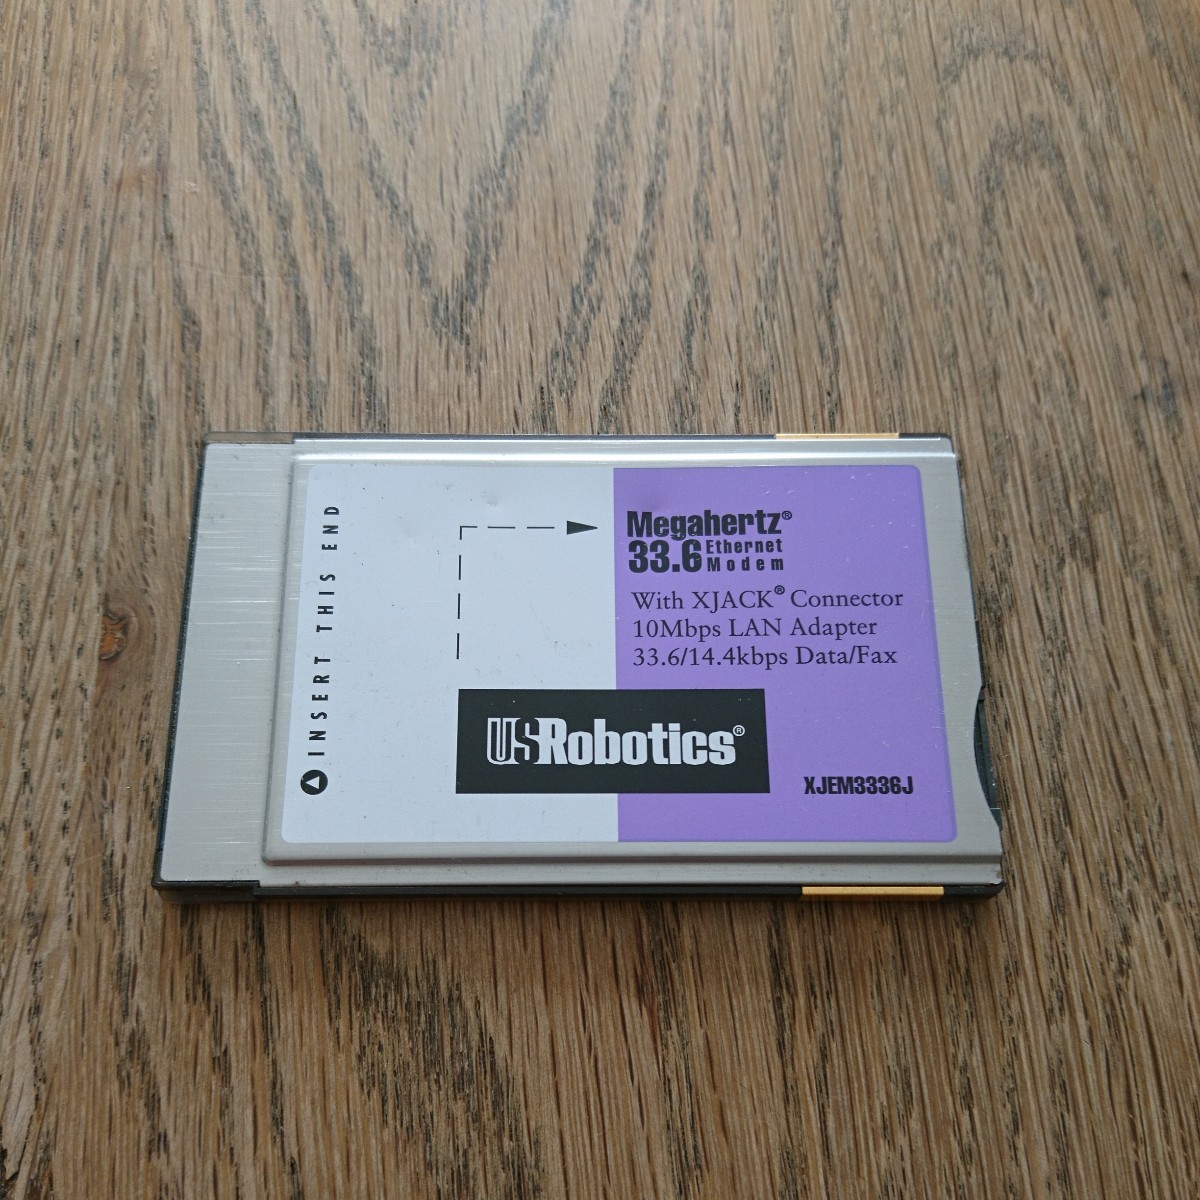 USRobotics Megahertz XJACK 33.6 Modem カード PCMCIAの画像1